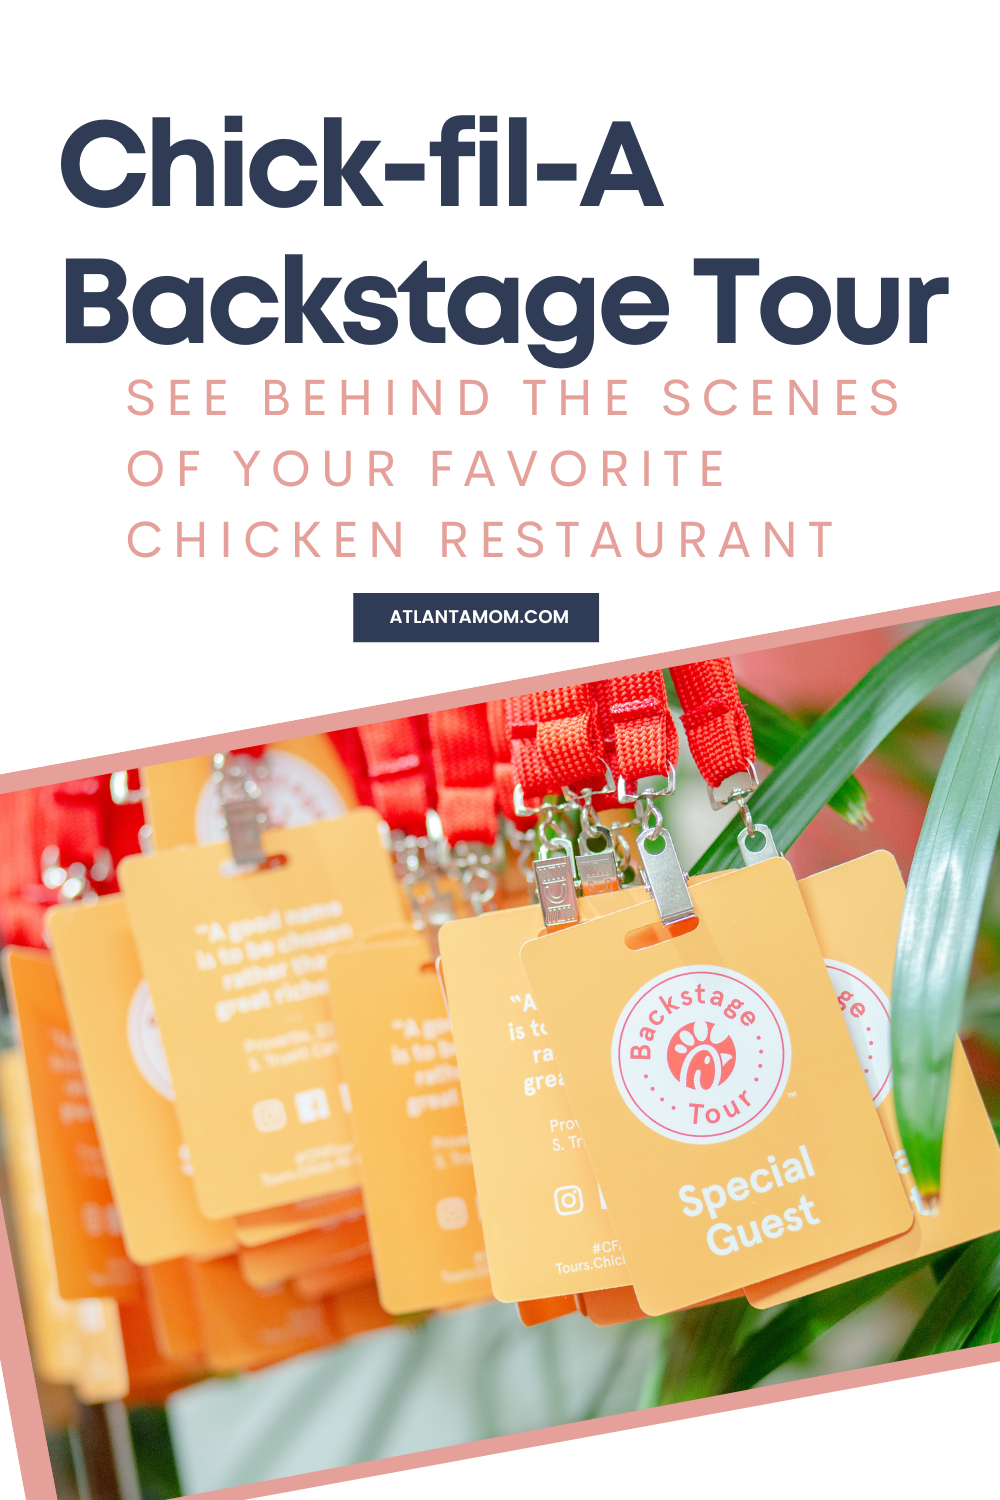 Chick-fil-A Backstage Tour